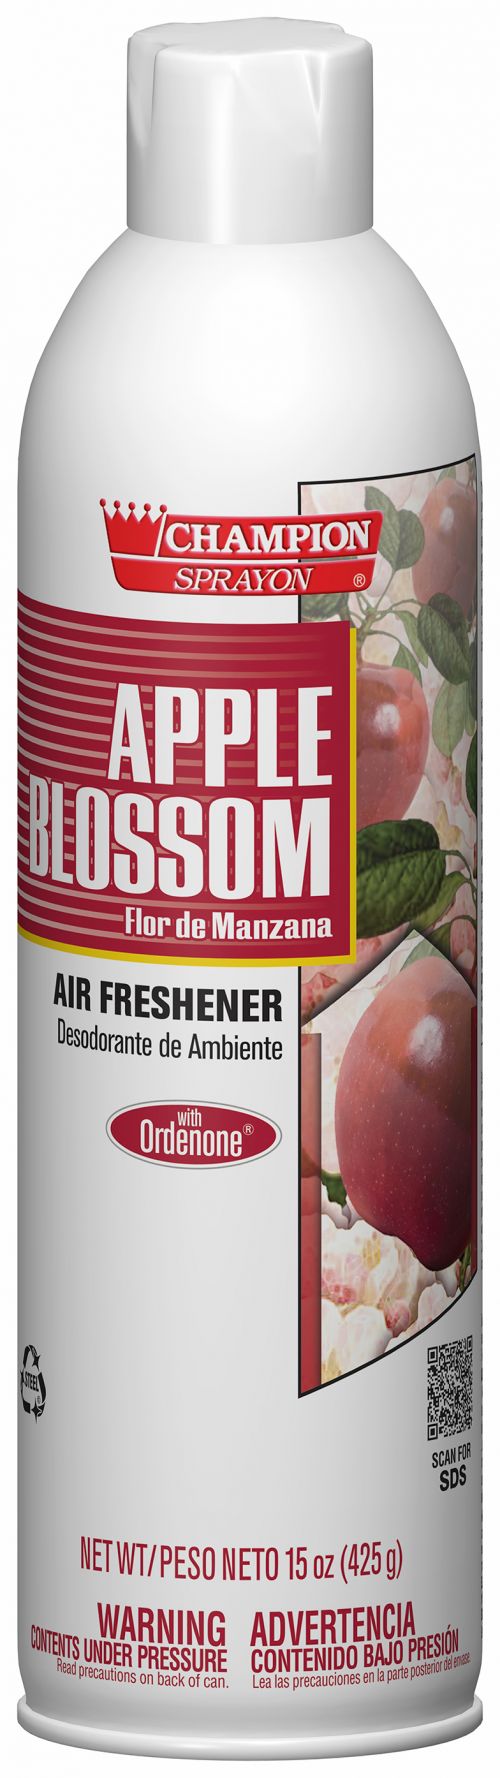 Chase Aerosol Water-based Freshener Apple Blossom Pack 12/20oz